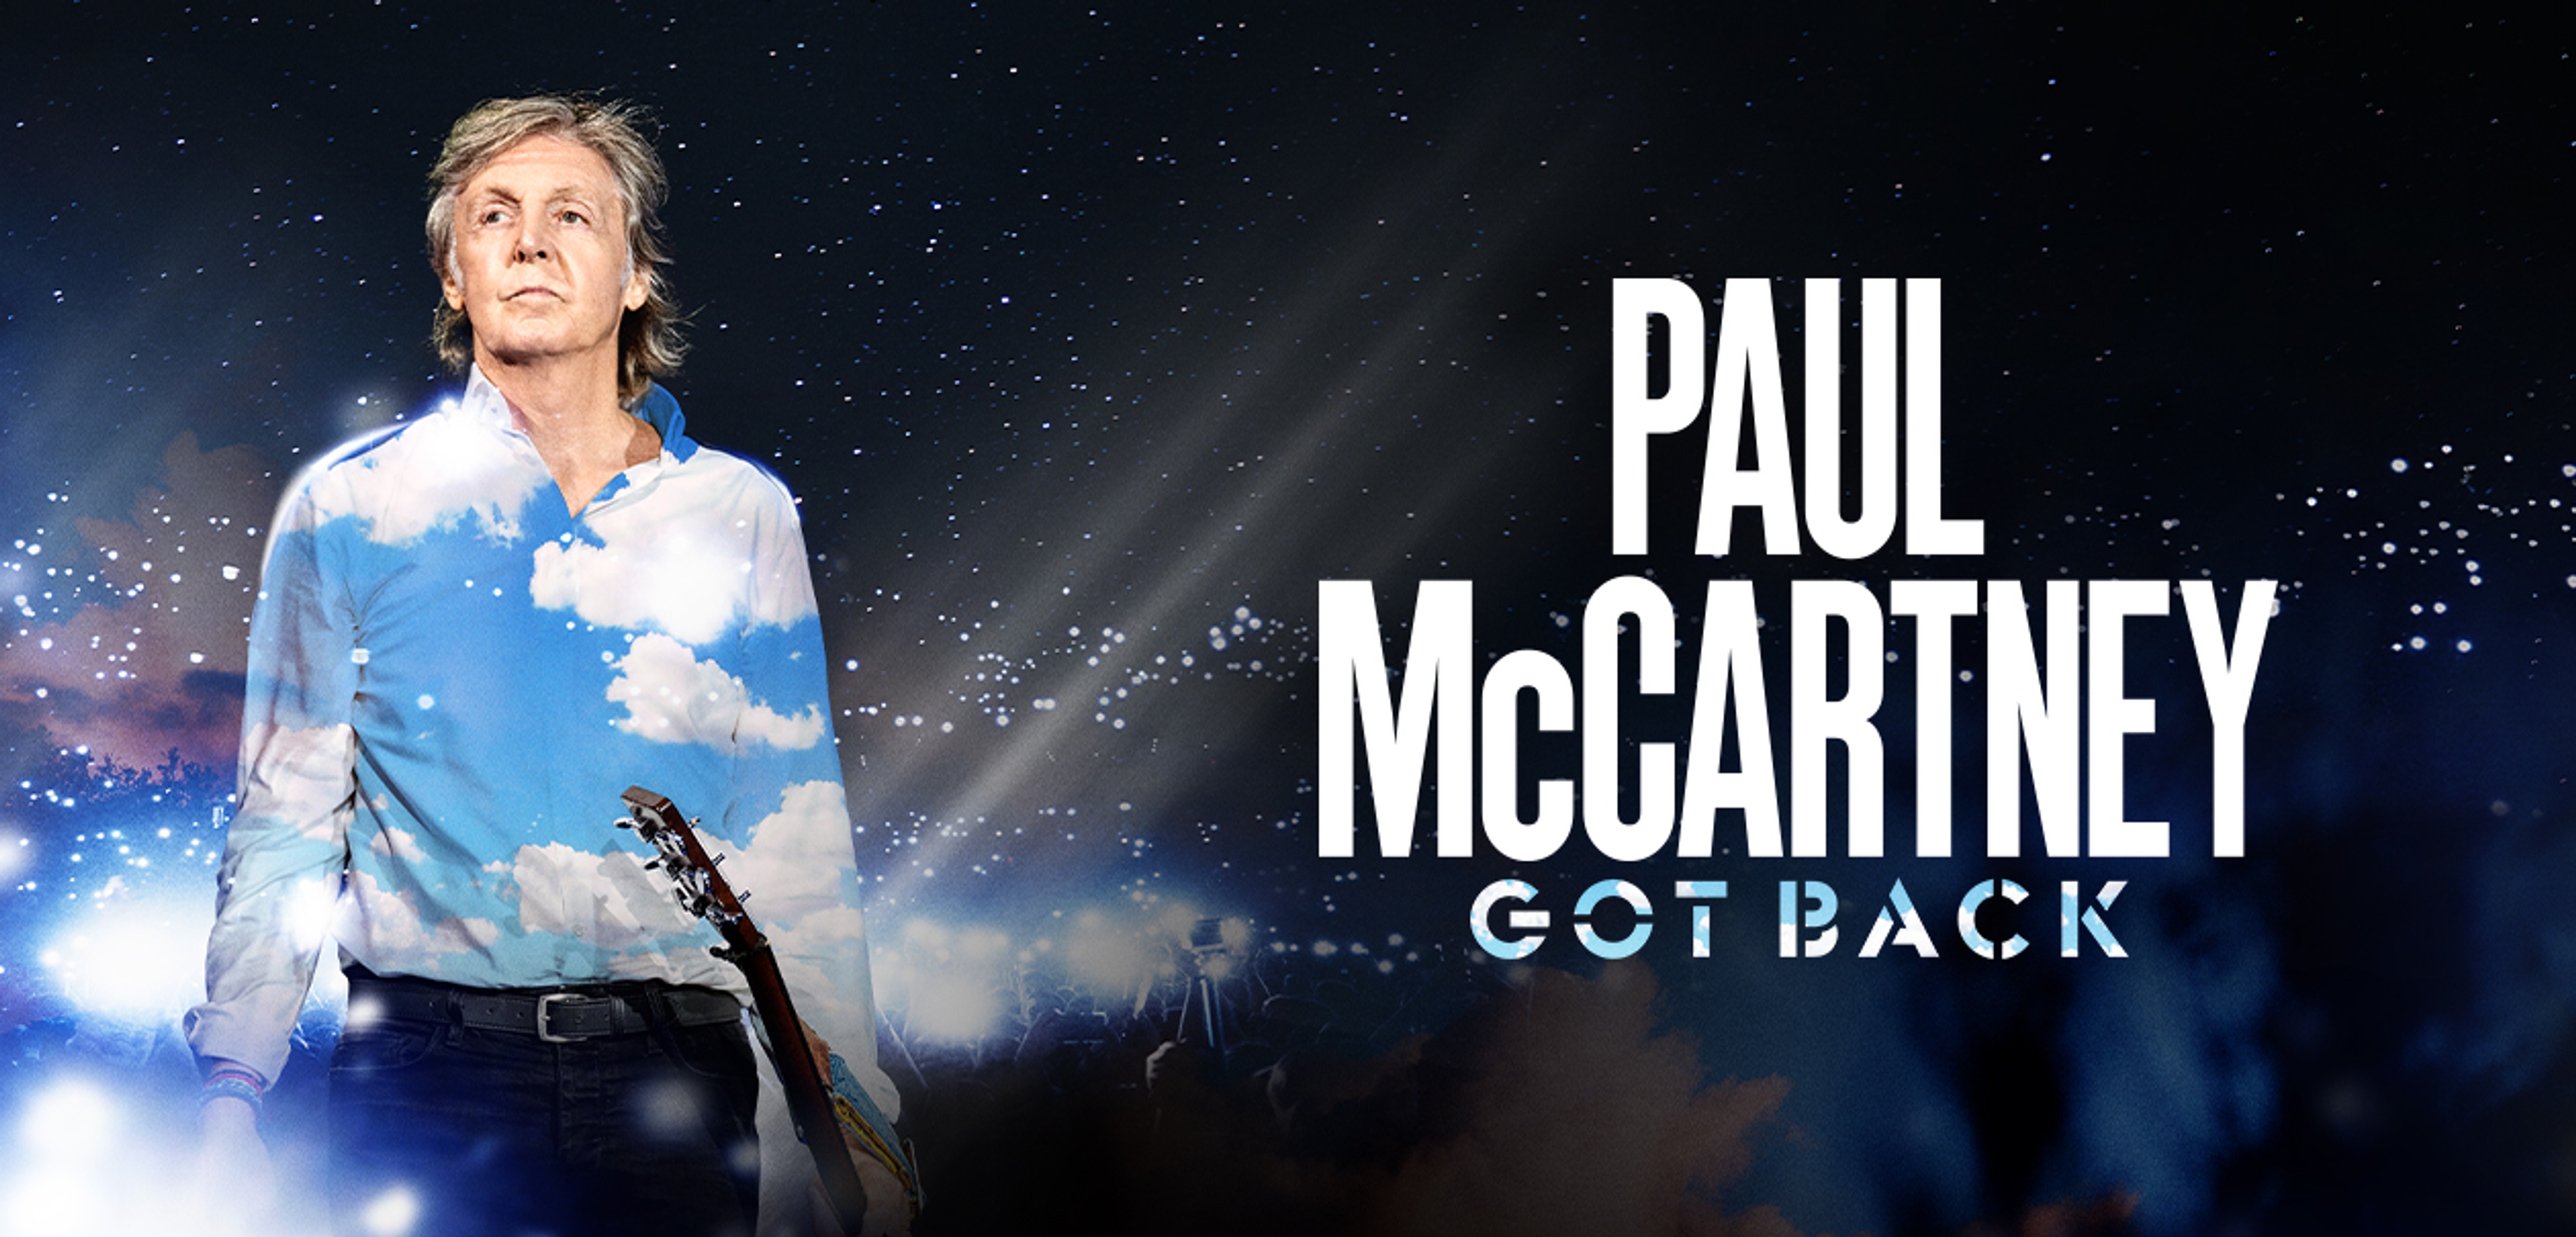 Paul McCartney 'Got Back' Tour Poster